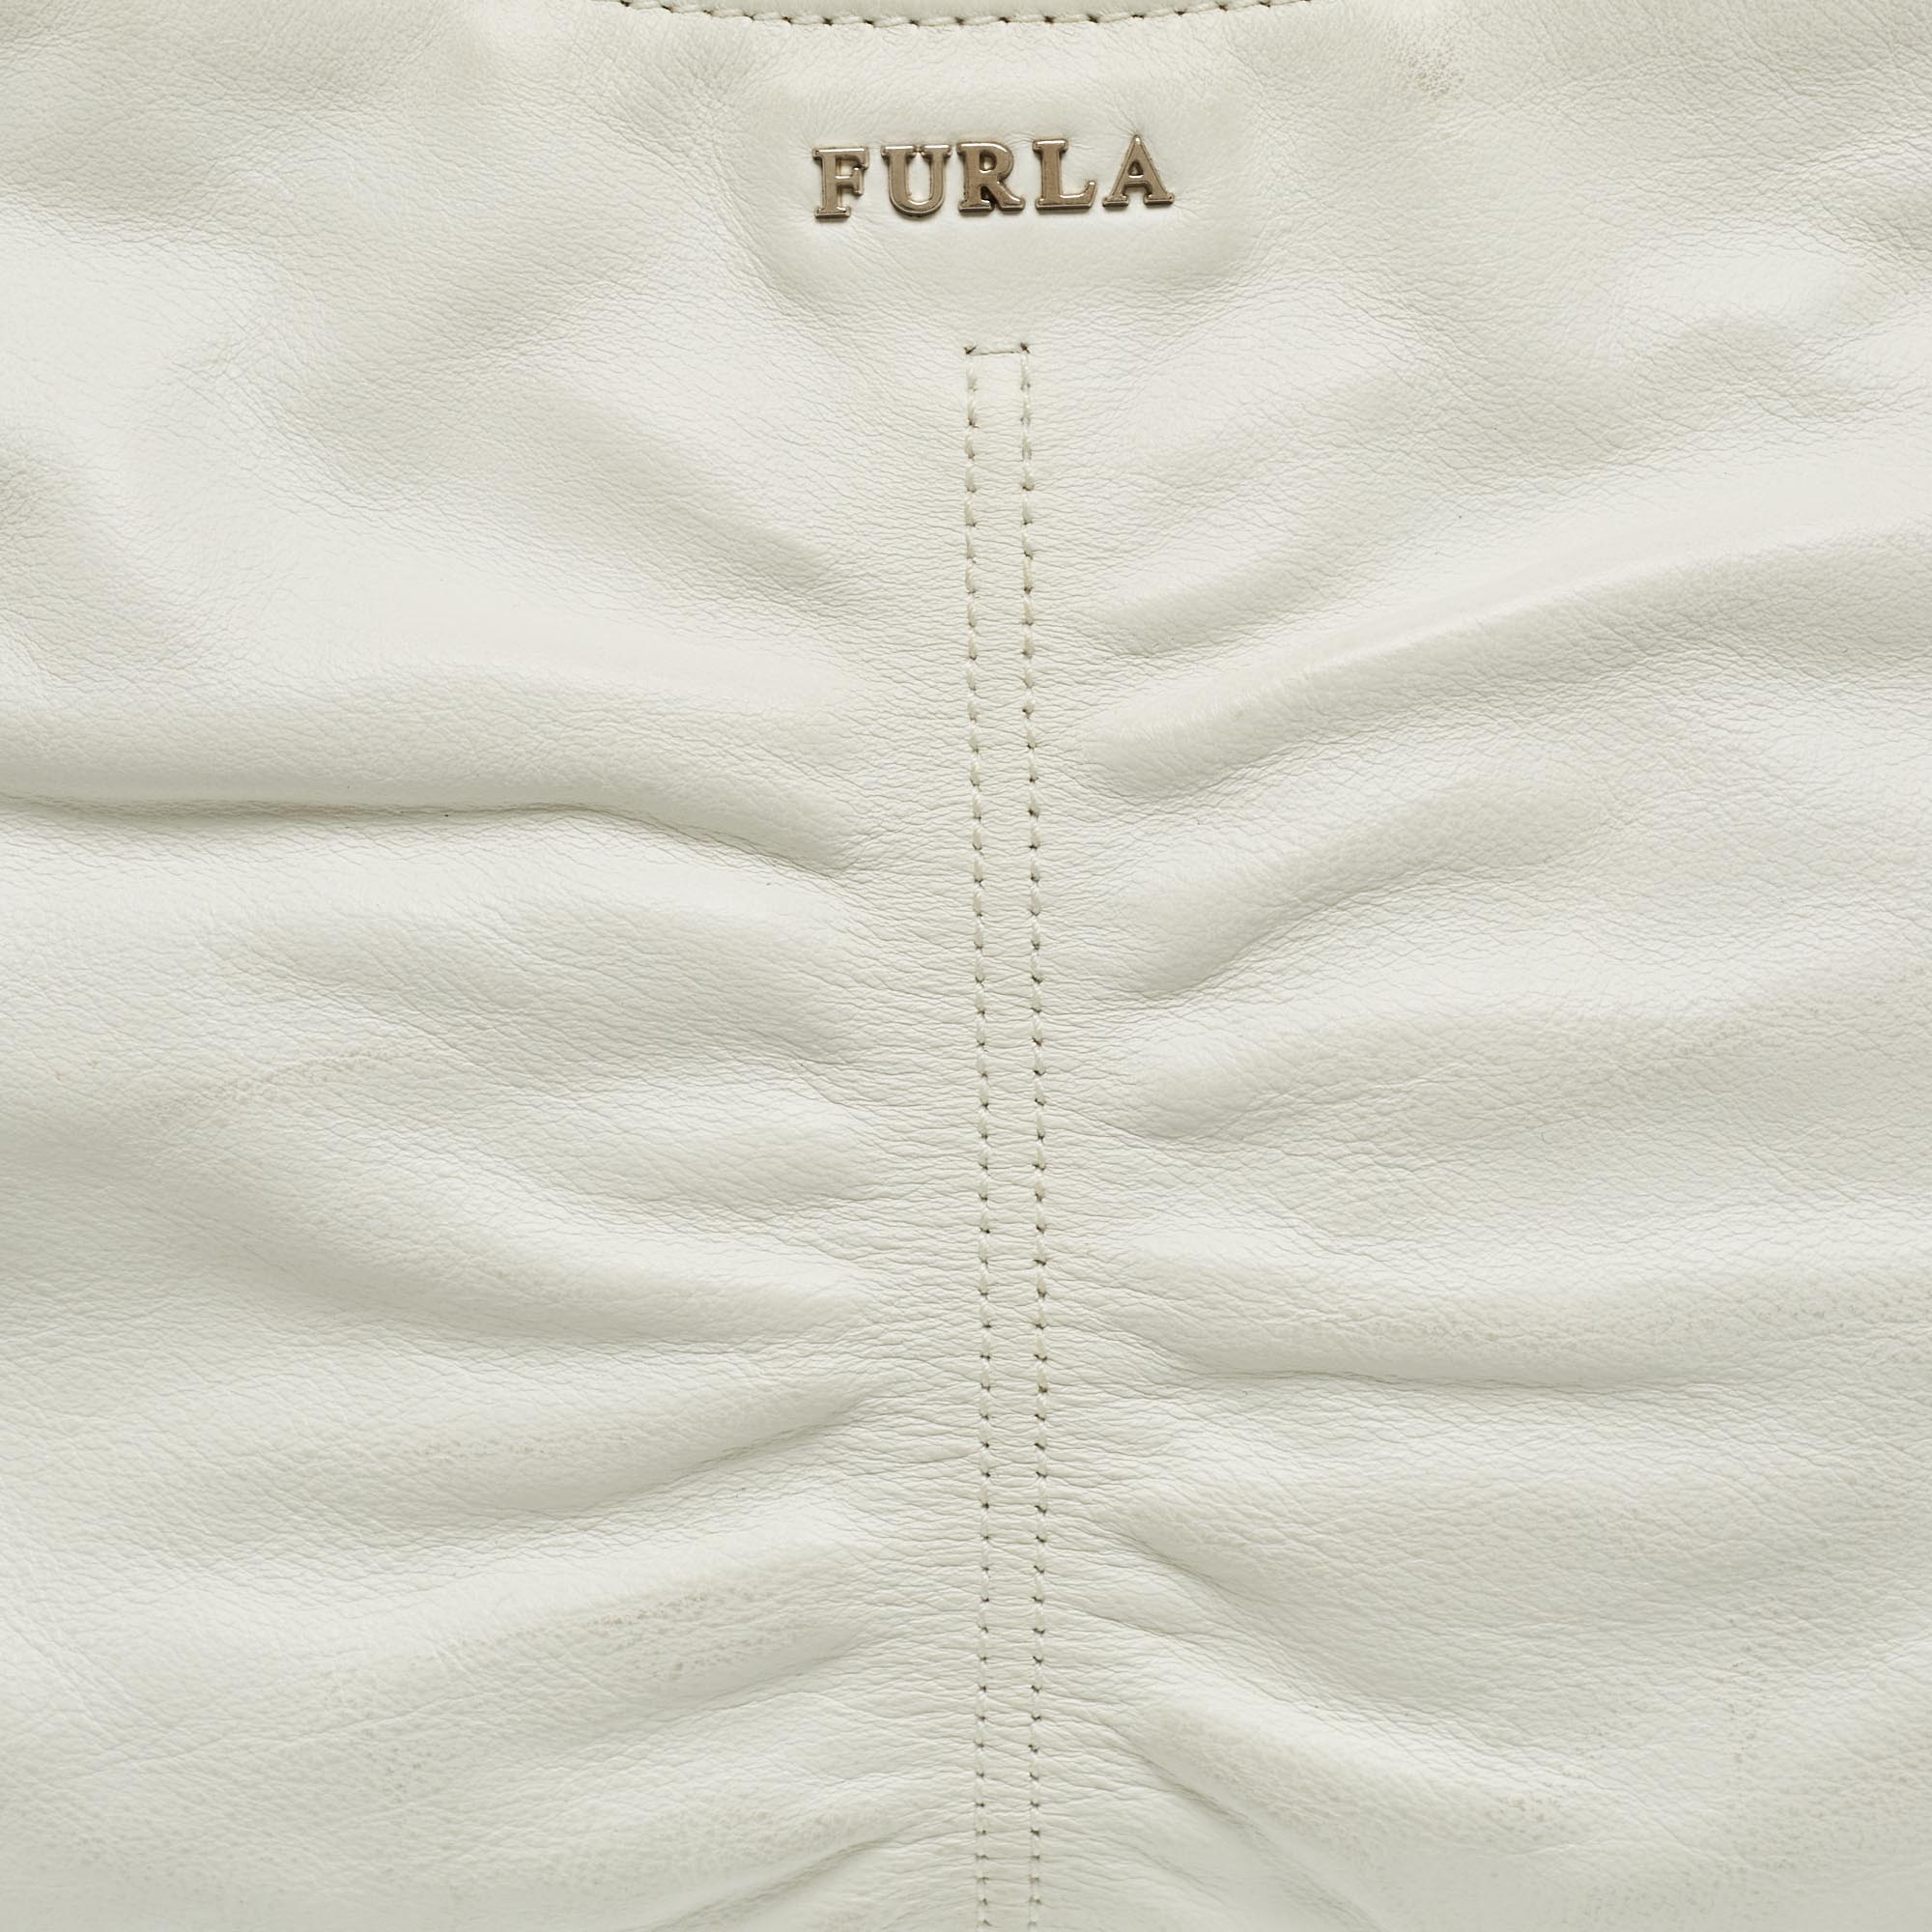 Furla White Leather Hobo